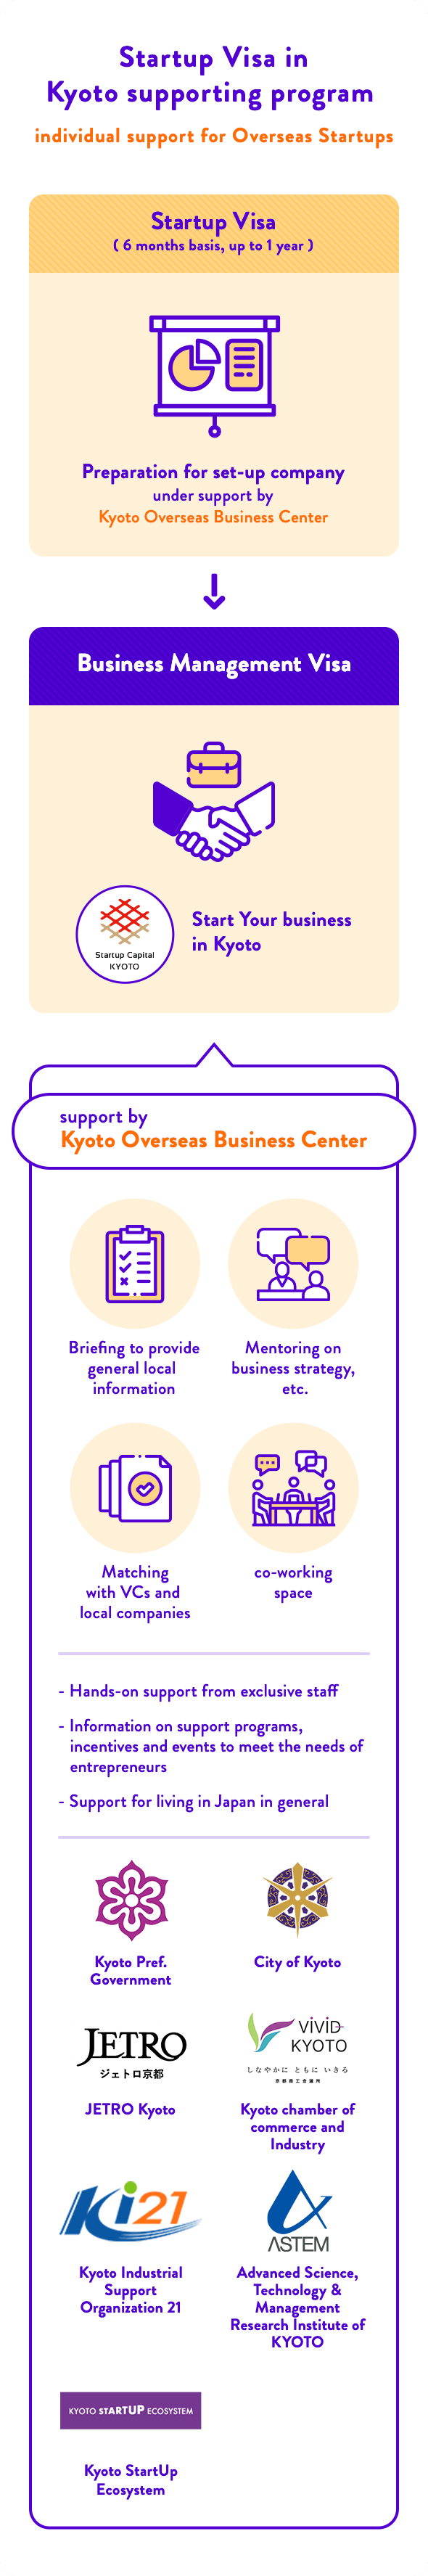 Startup Visa in Kyoto supporting program 